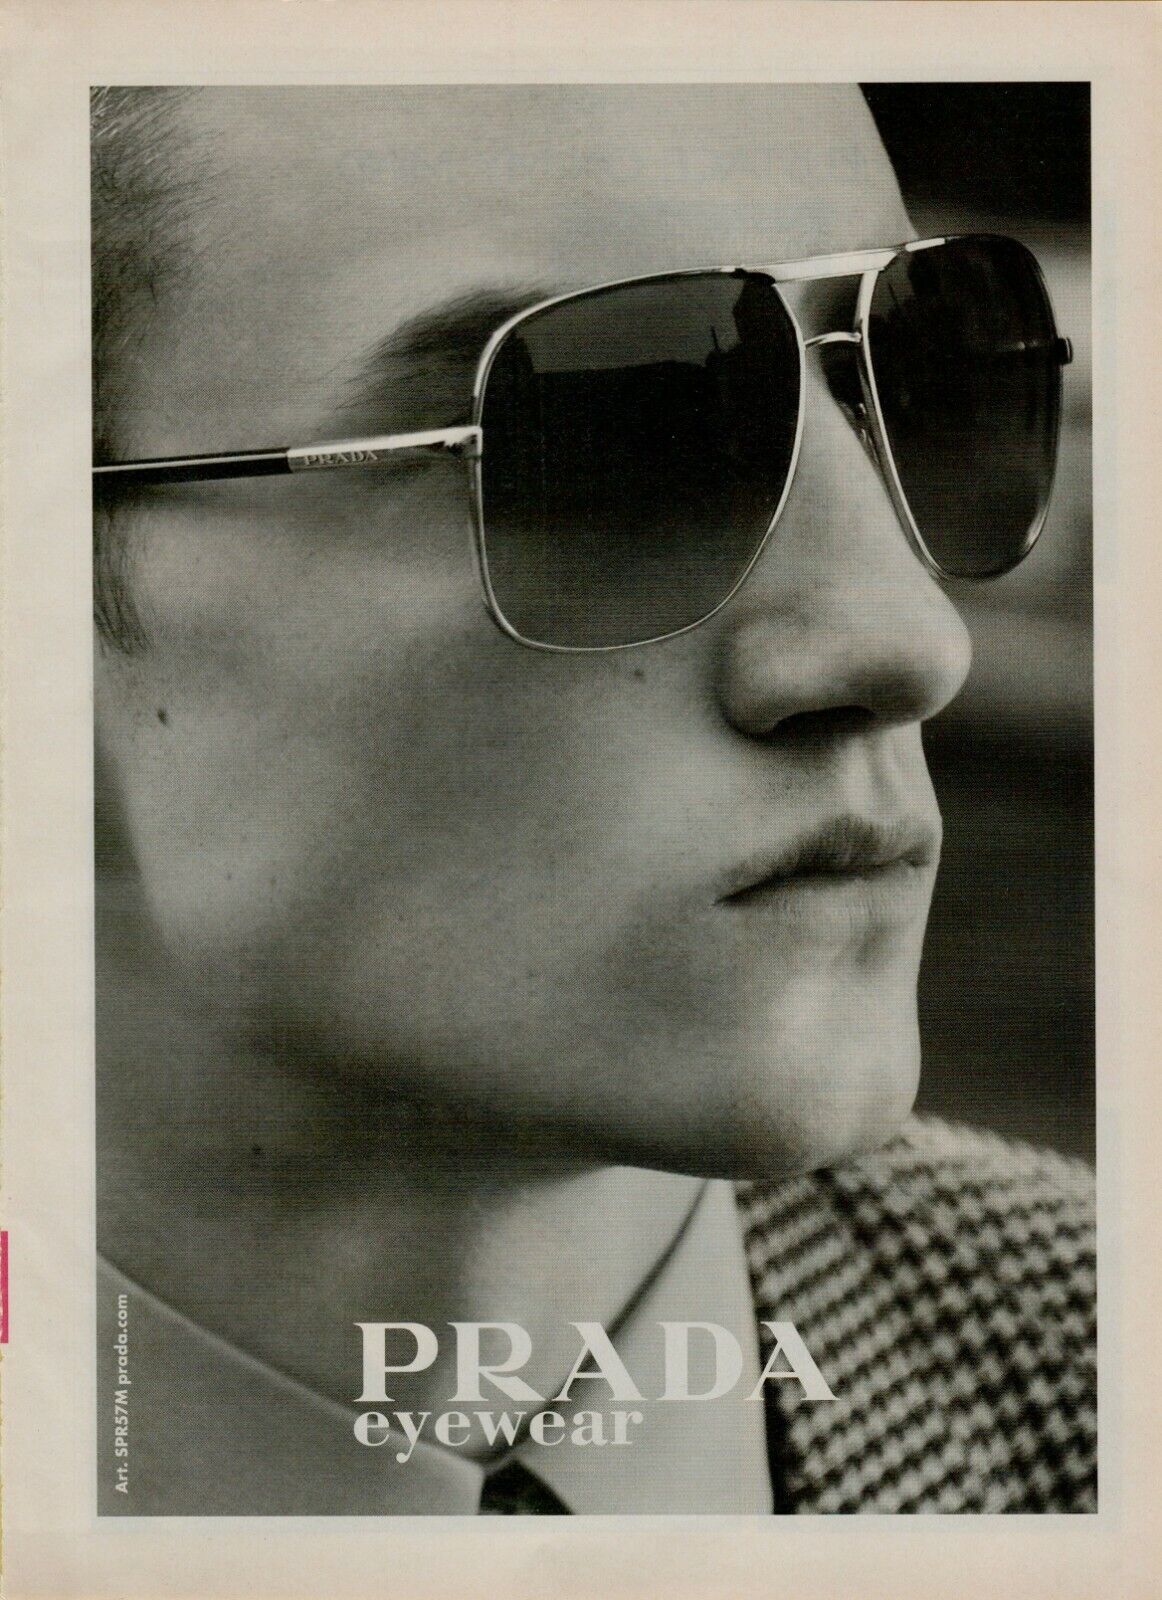 2010 Prada Eyewear Male Model Hound\'s-tooth Jacket Shades Photo Vintage Print Ad